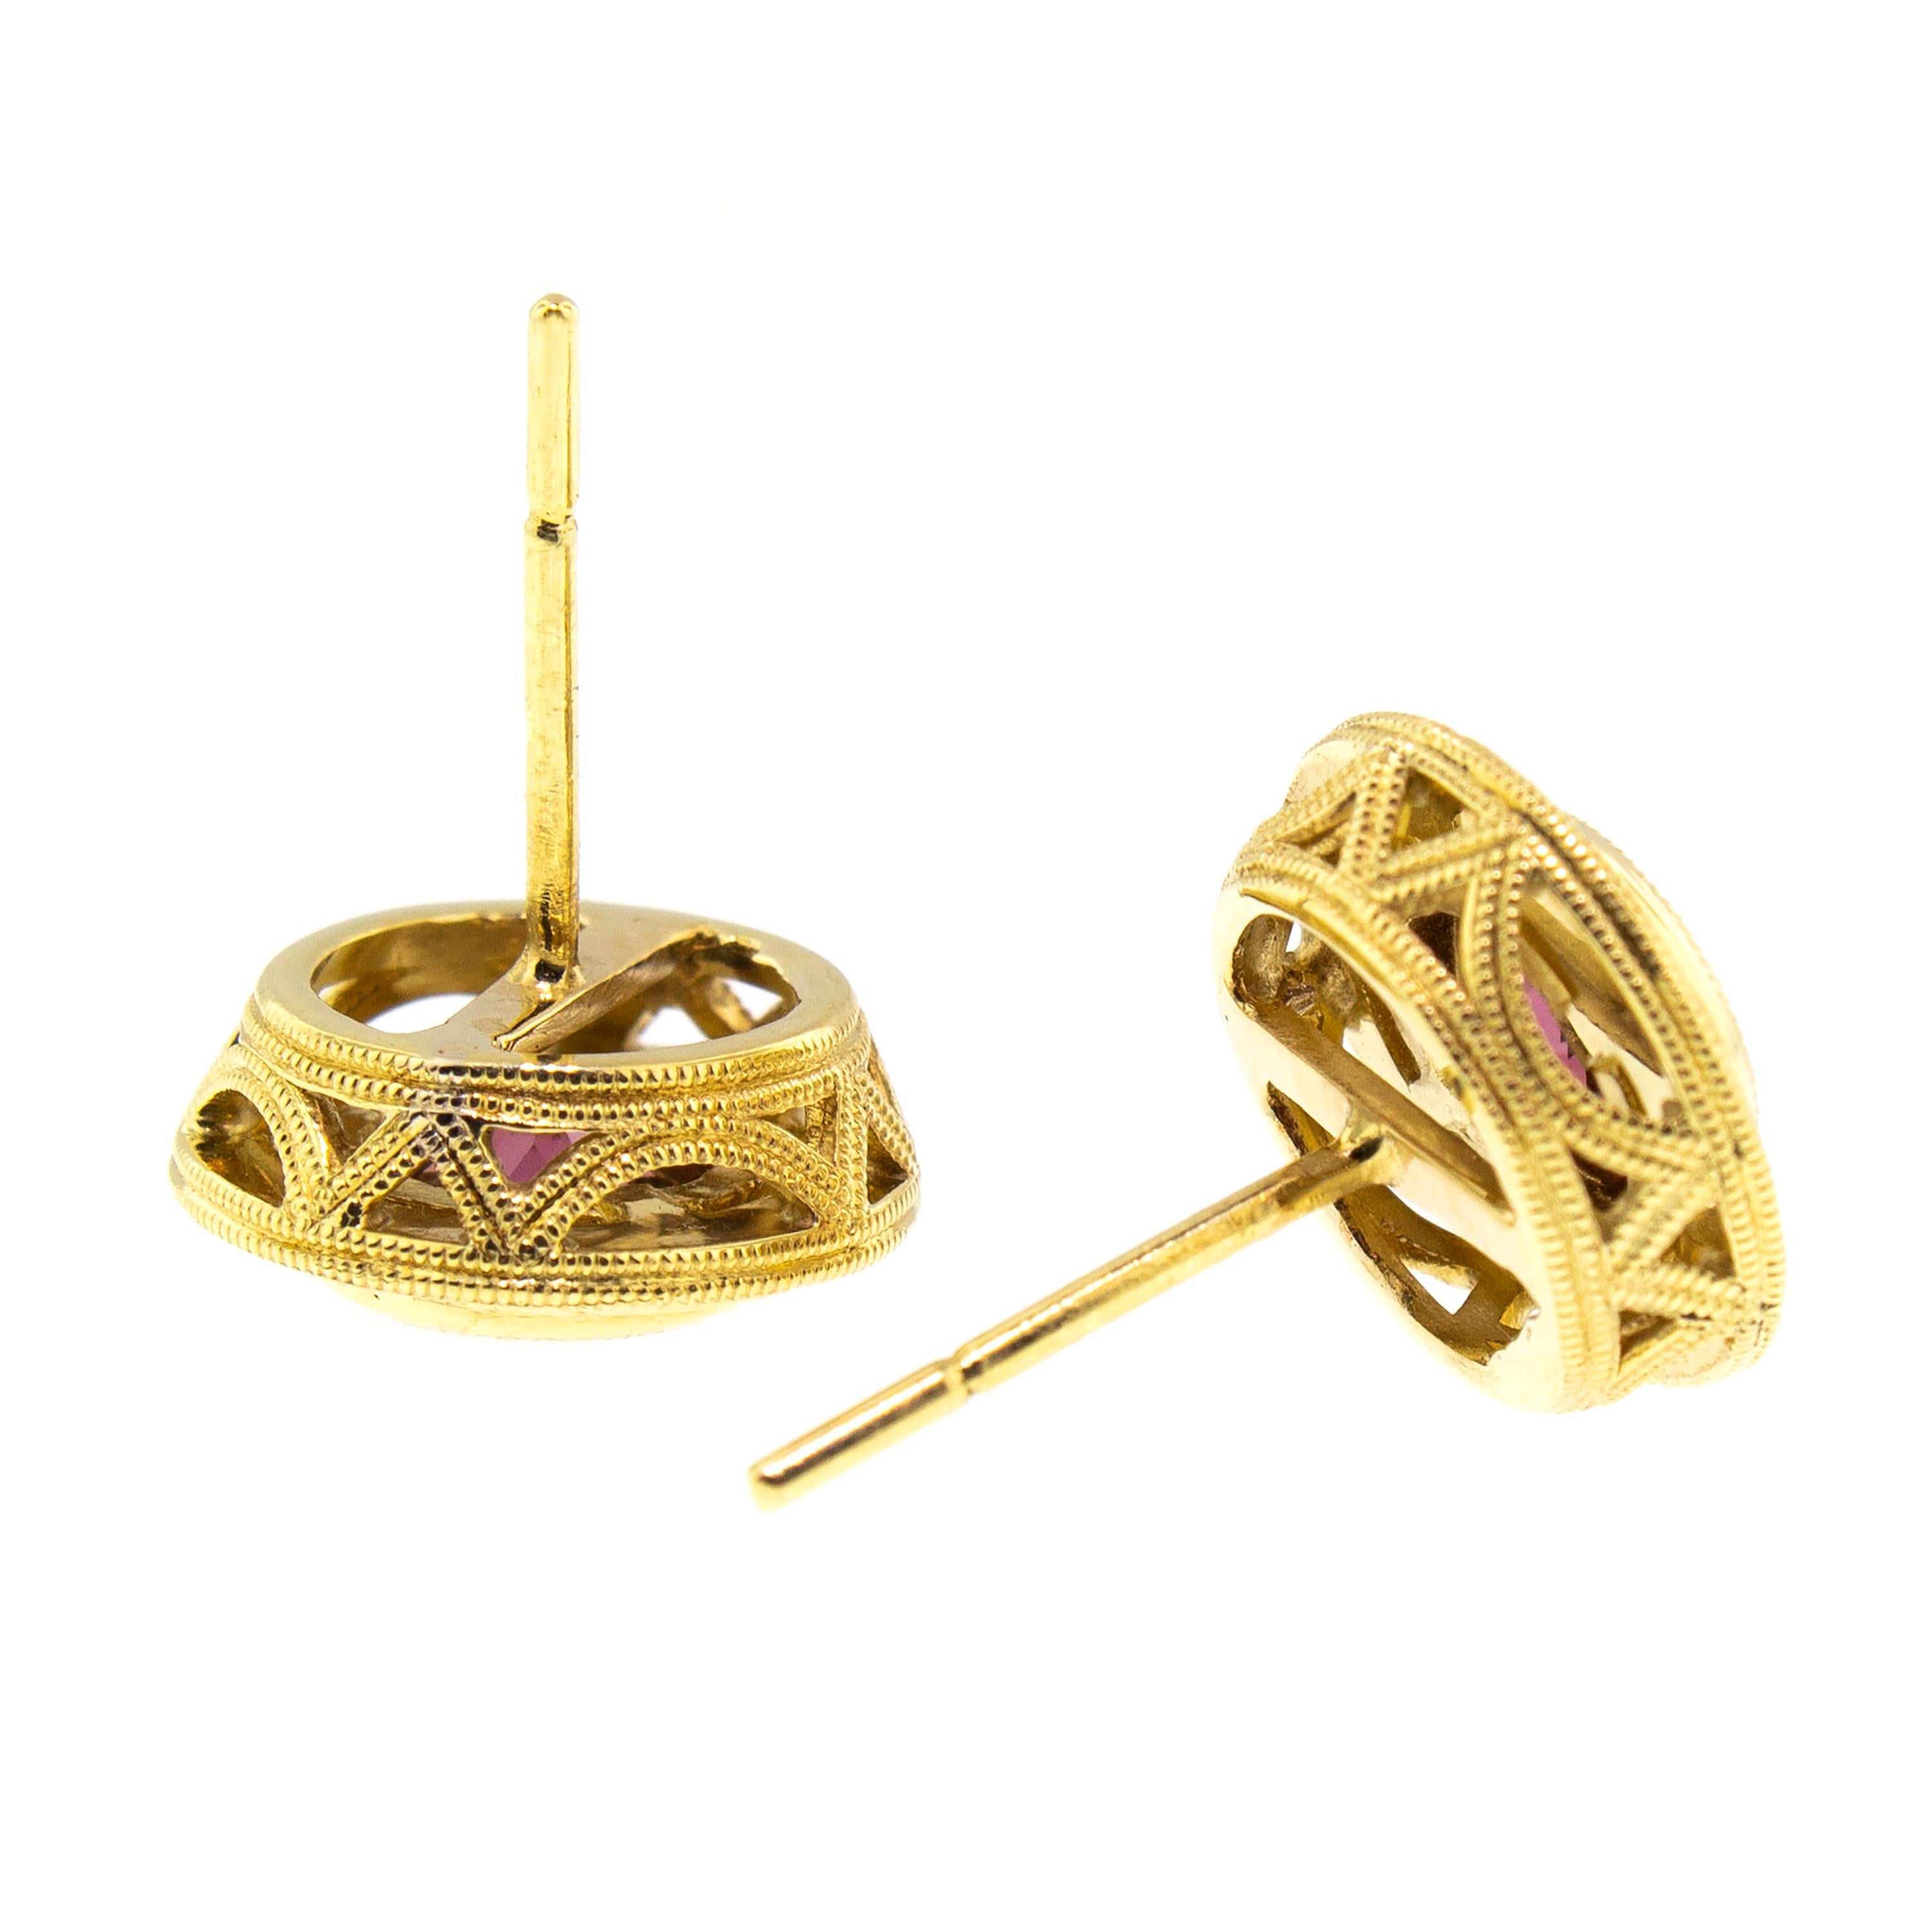 1.98 Carat Rhodolite Garnet in 18 Karat Gold Hand Engraved Earrings, Made in USA For Sale 1